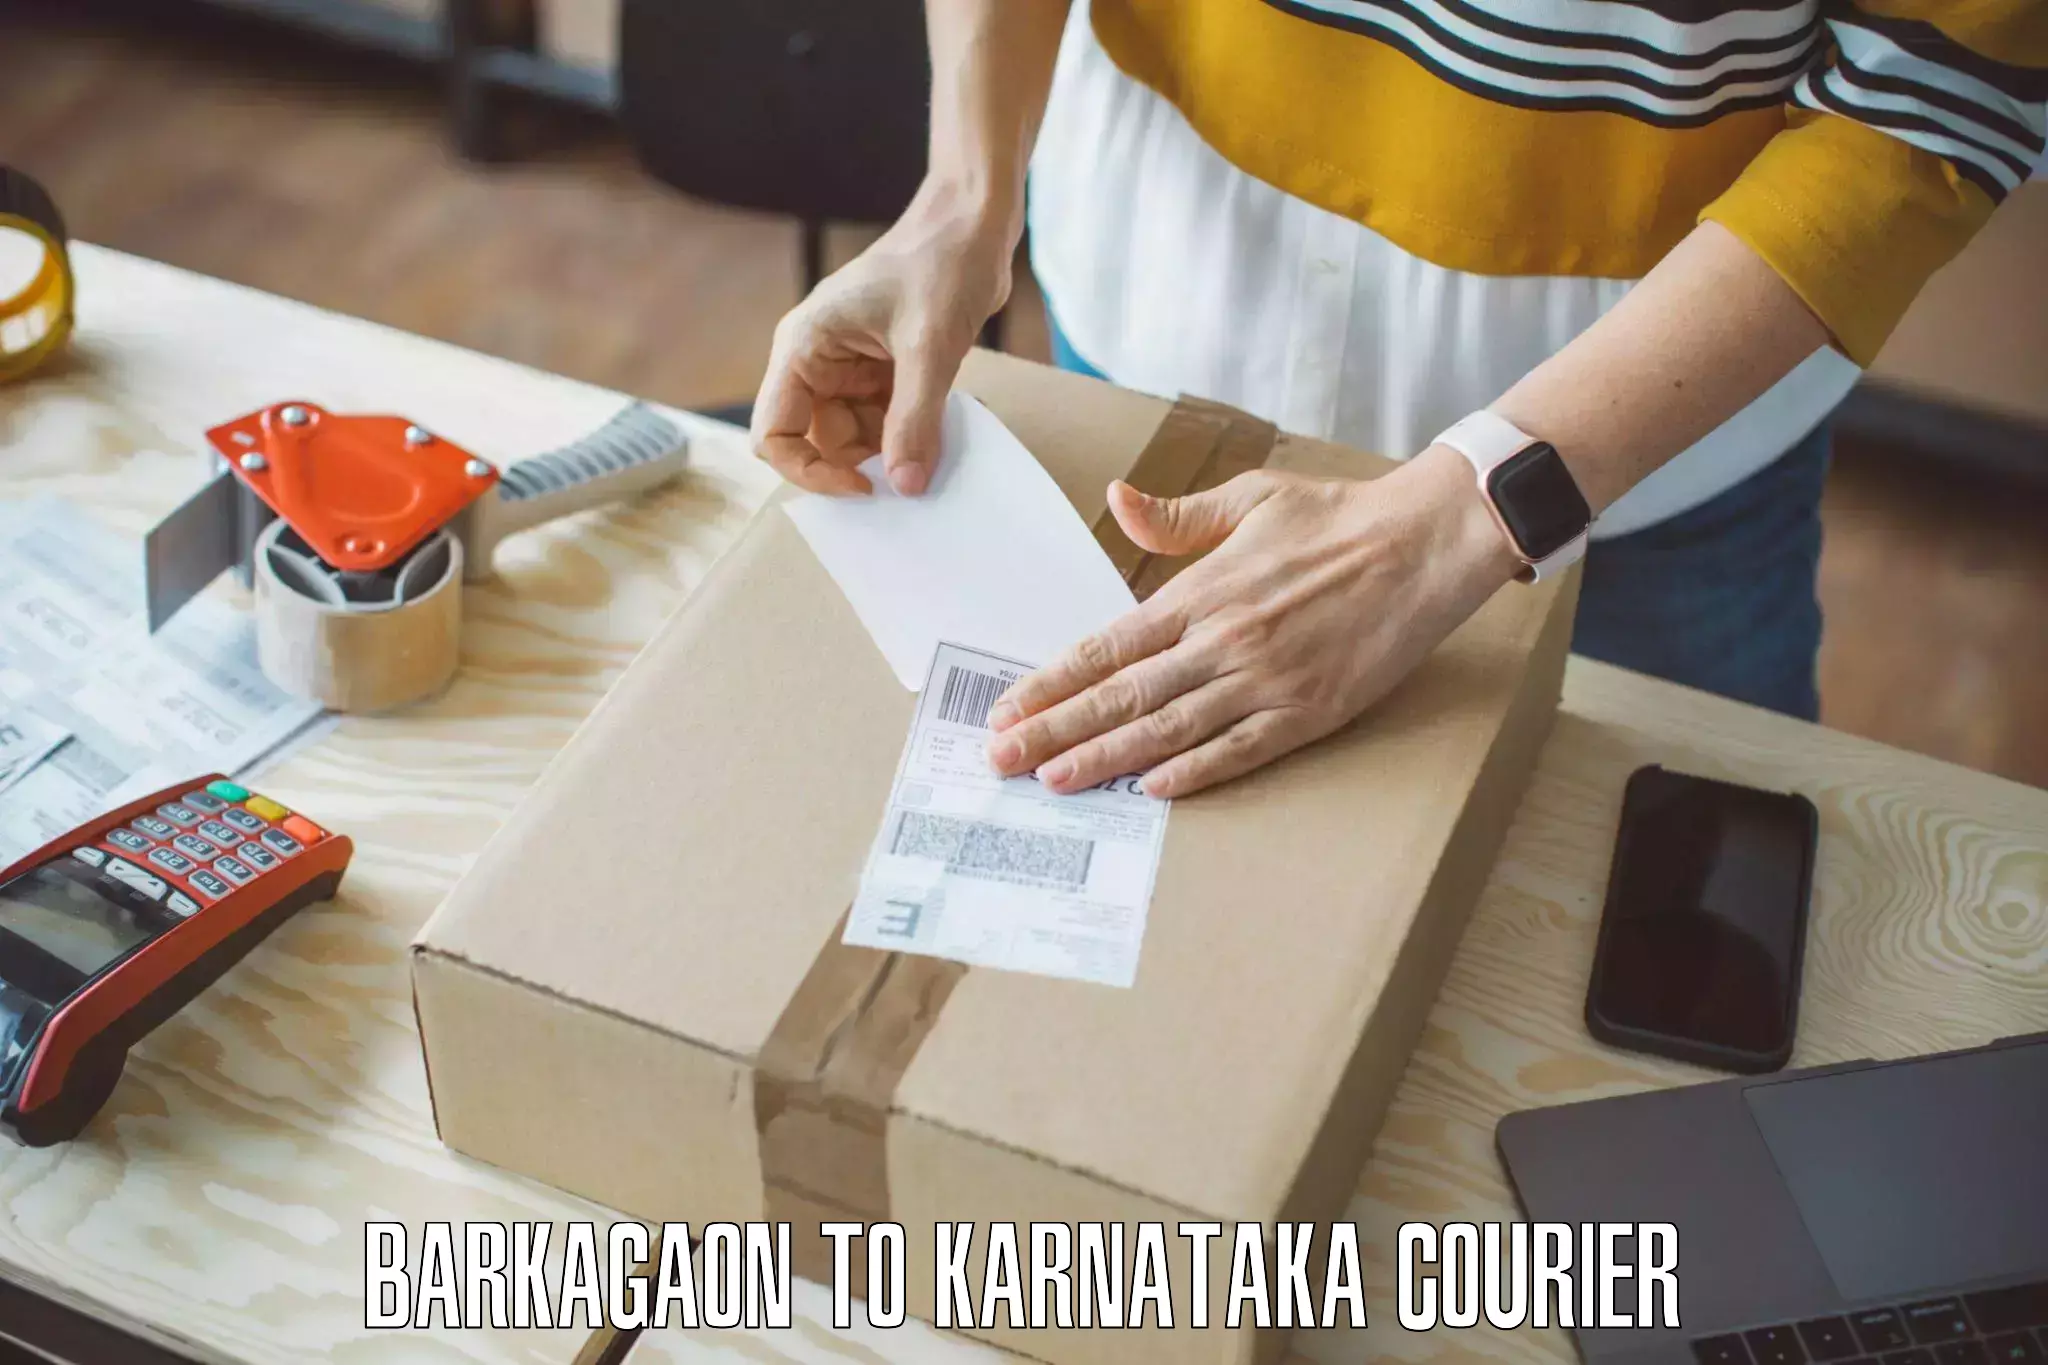 Furniture delivery service Barkagaon to Karnataka